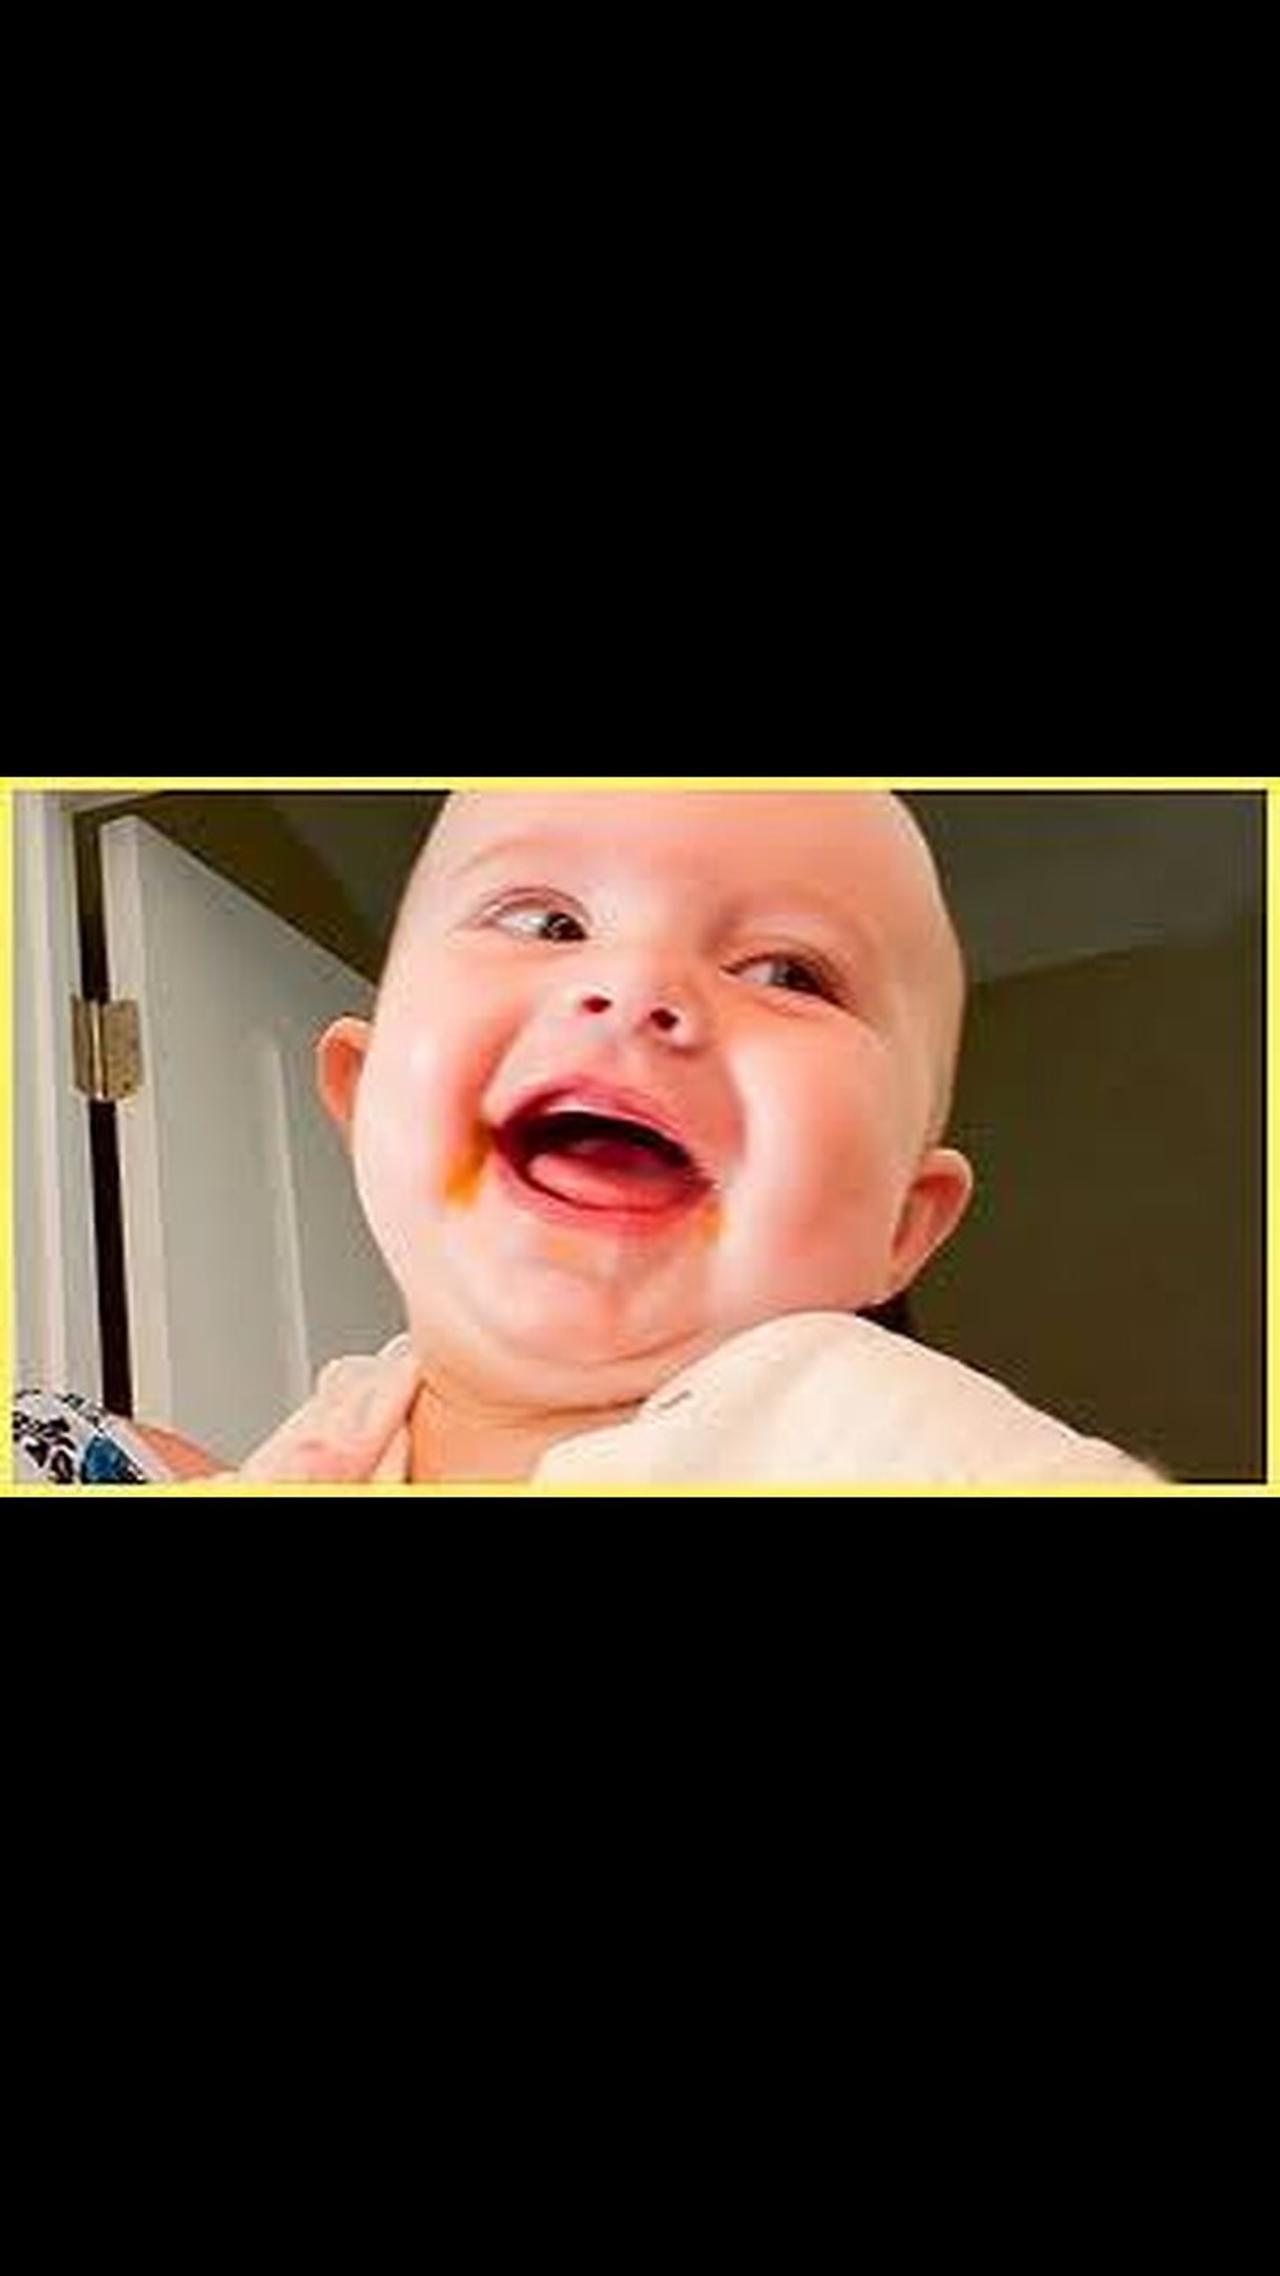 Joyful Giggles: A Baby's Heartwarming Laughter